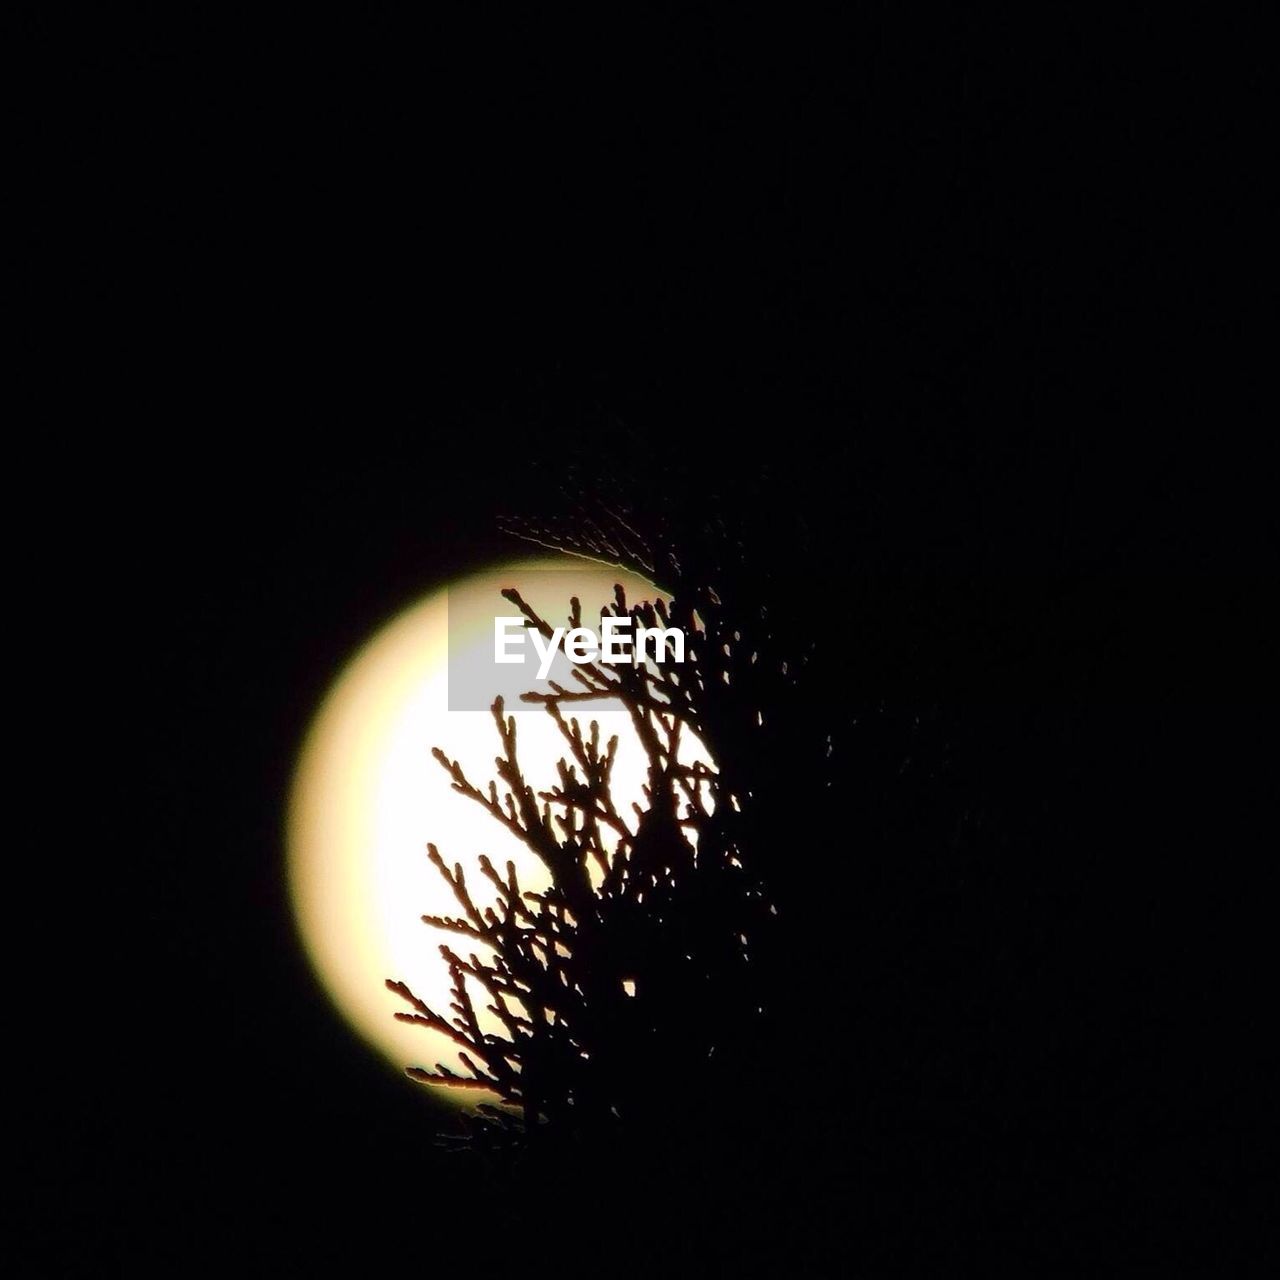 View of full moon behind pine needles in night sky